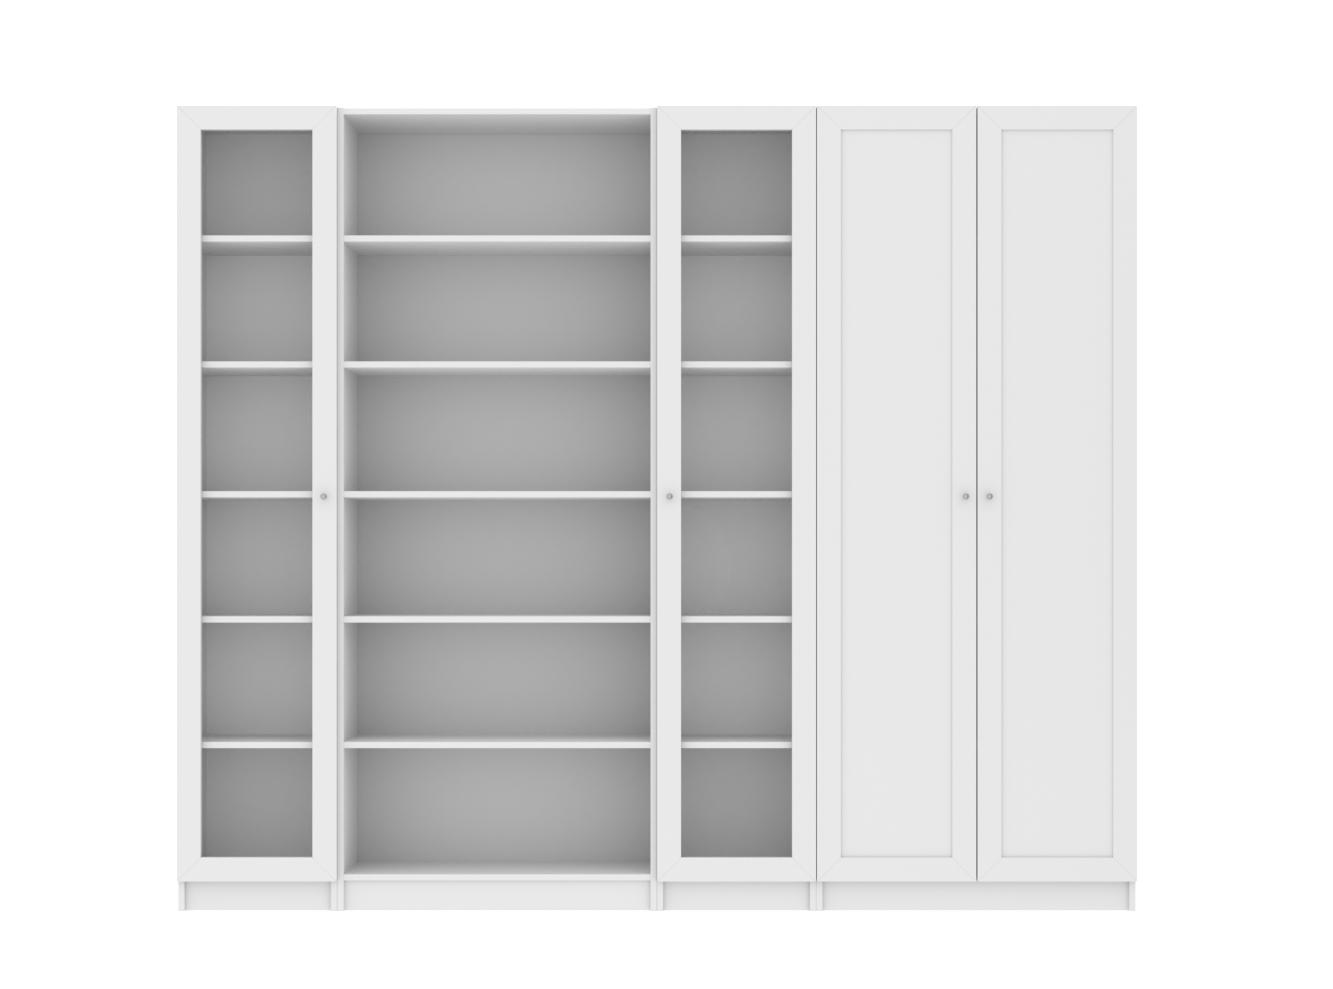 Книжный шкаф Билли 414 white ИКЕА (IKEA) изображение товара